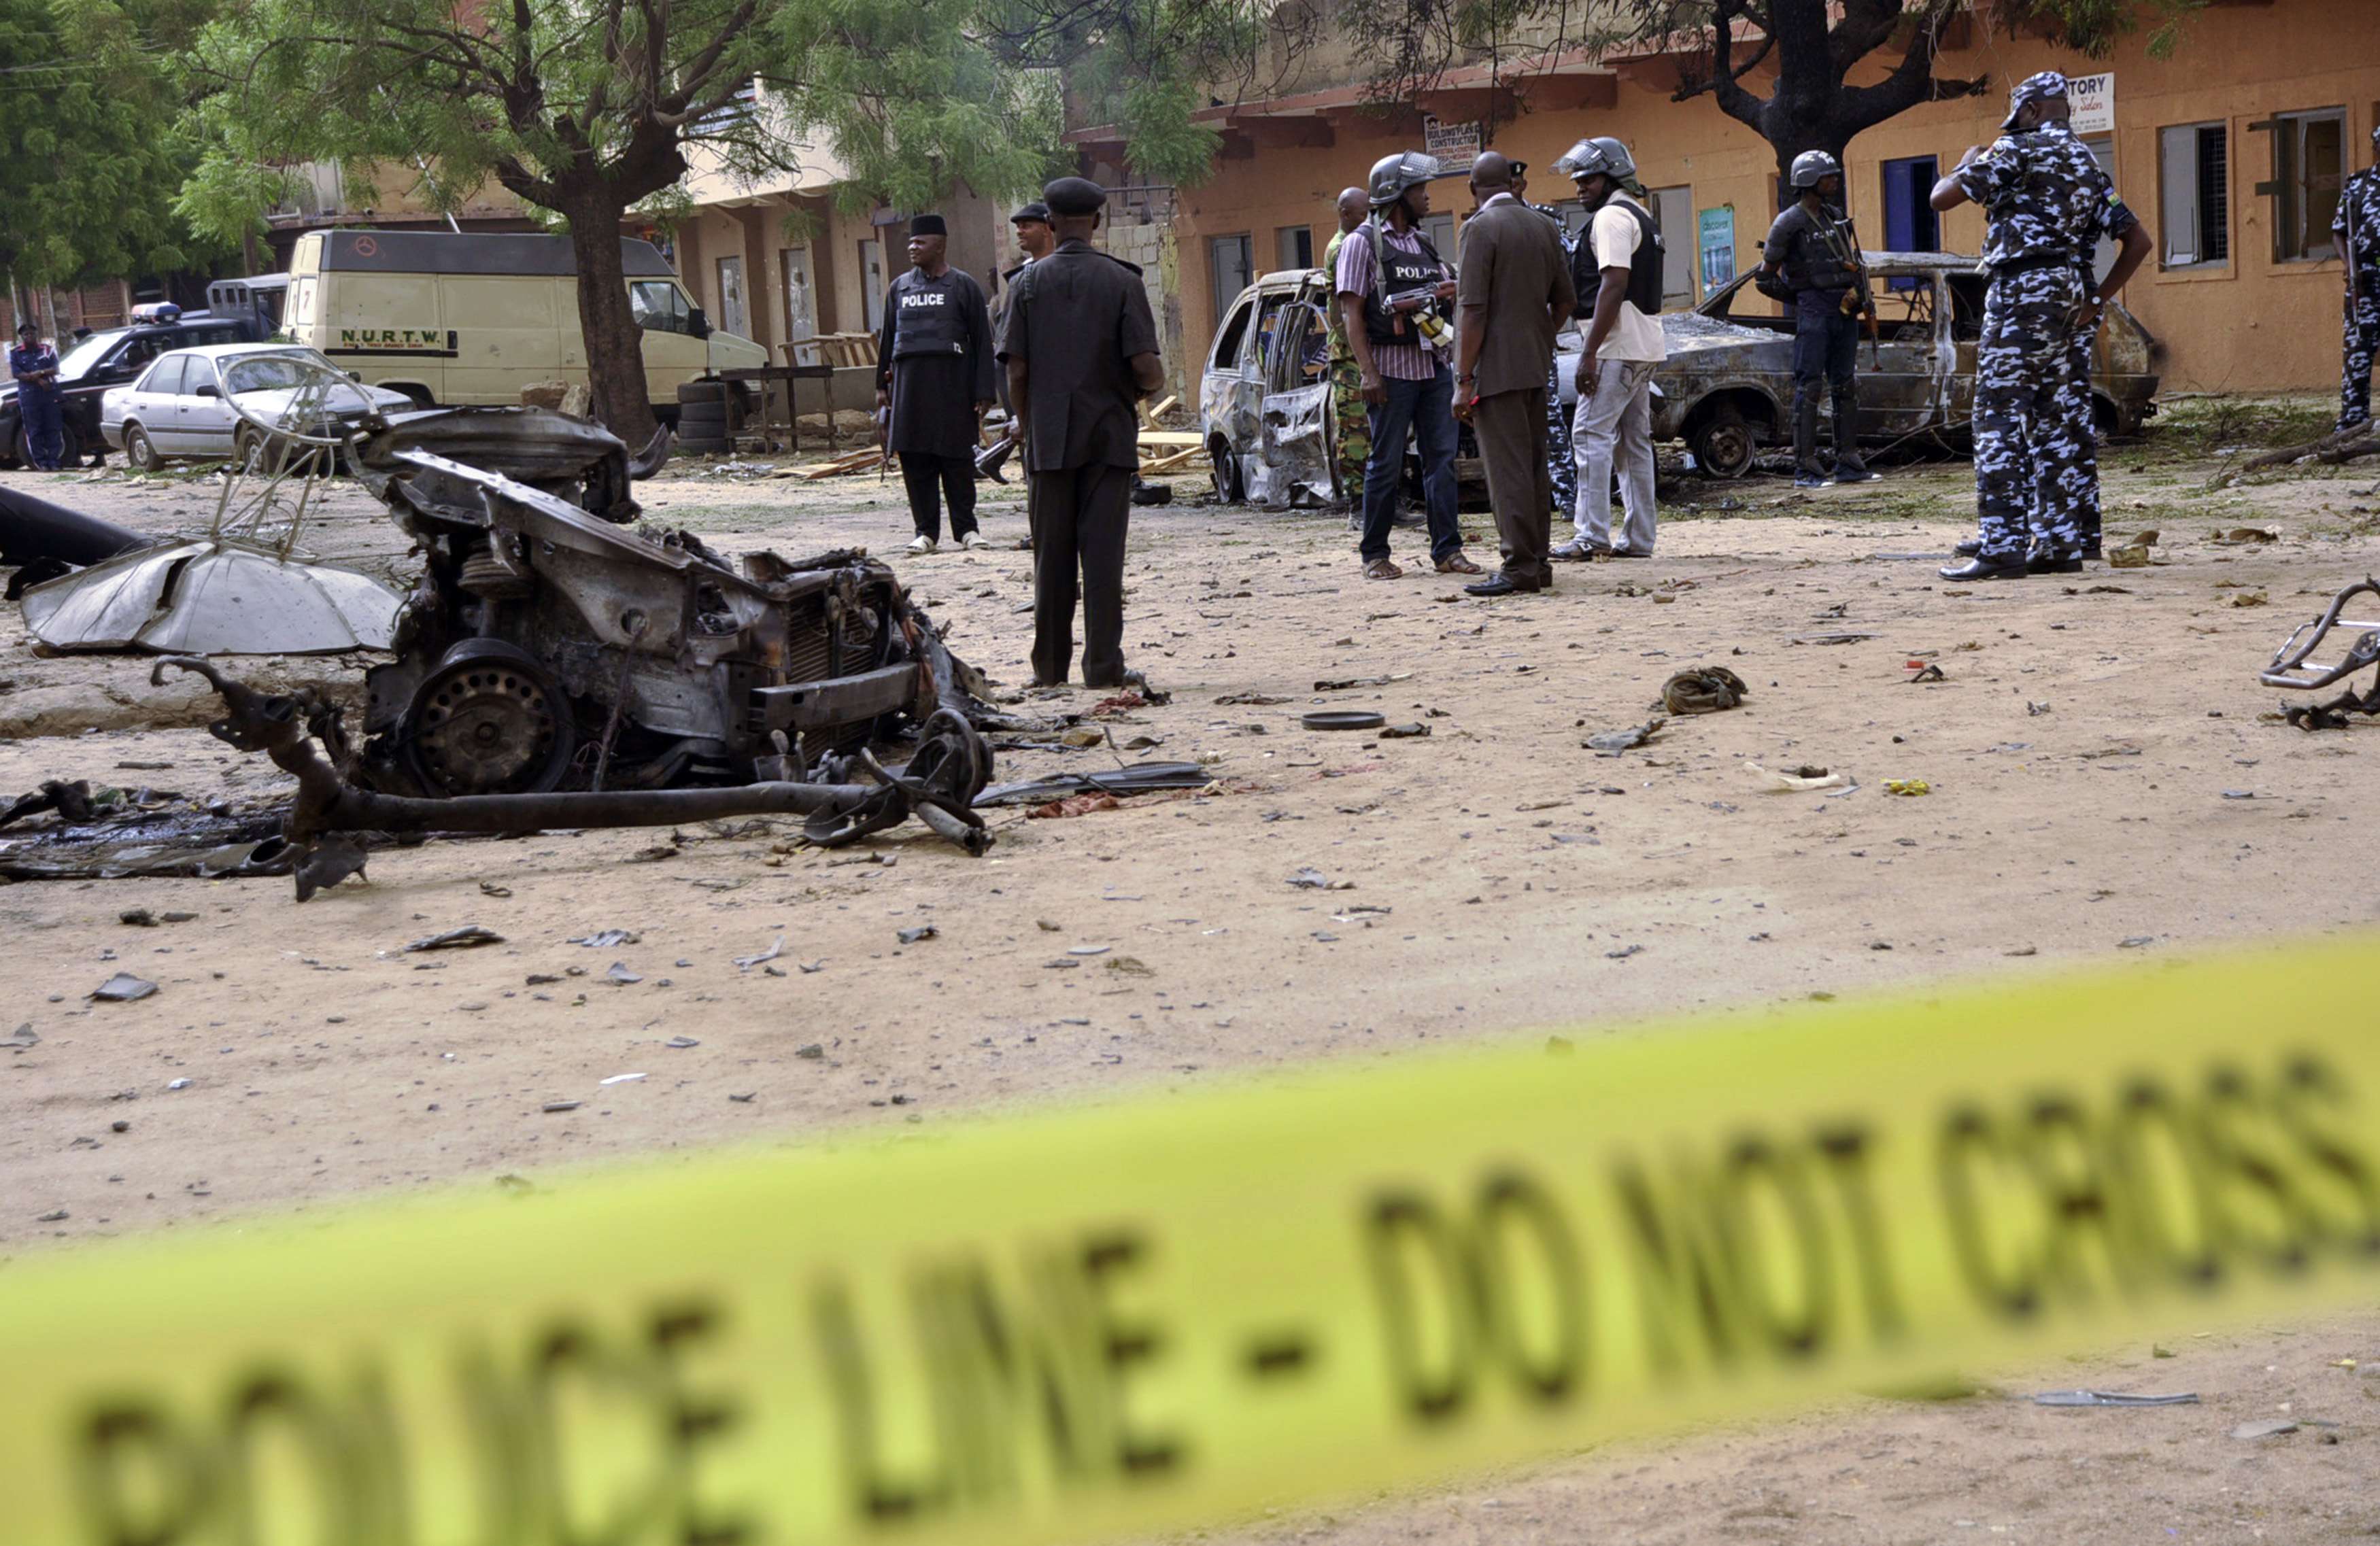  'Babies used' in Nigeria suicide bombings 